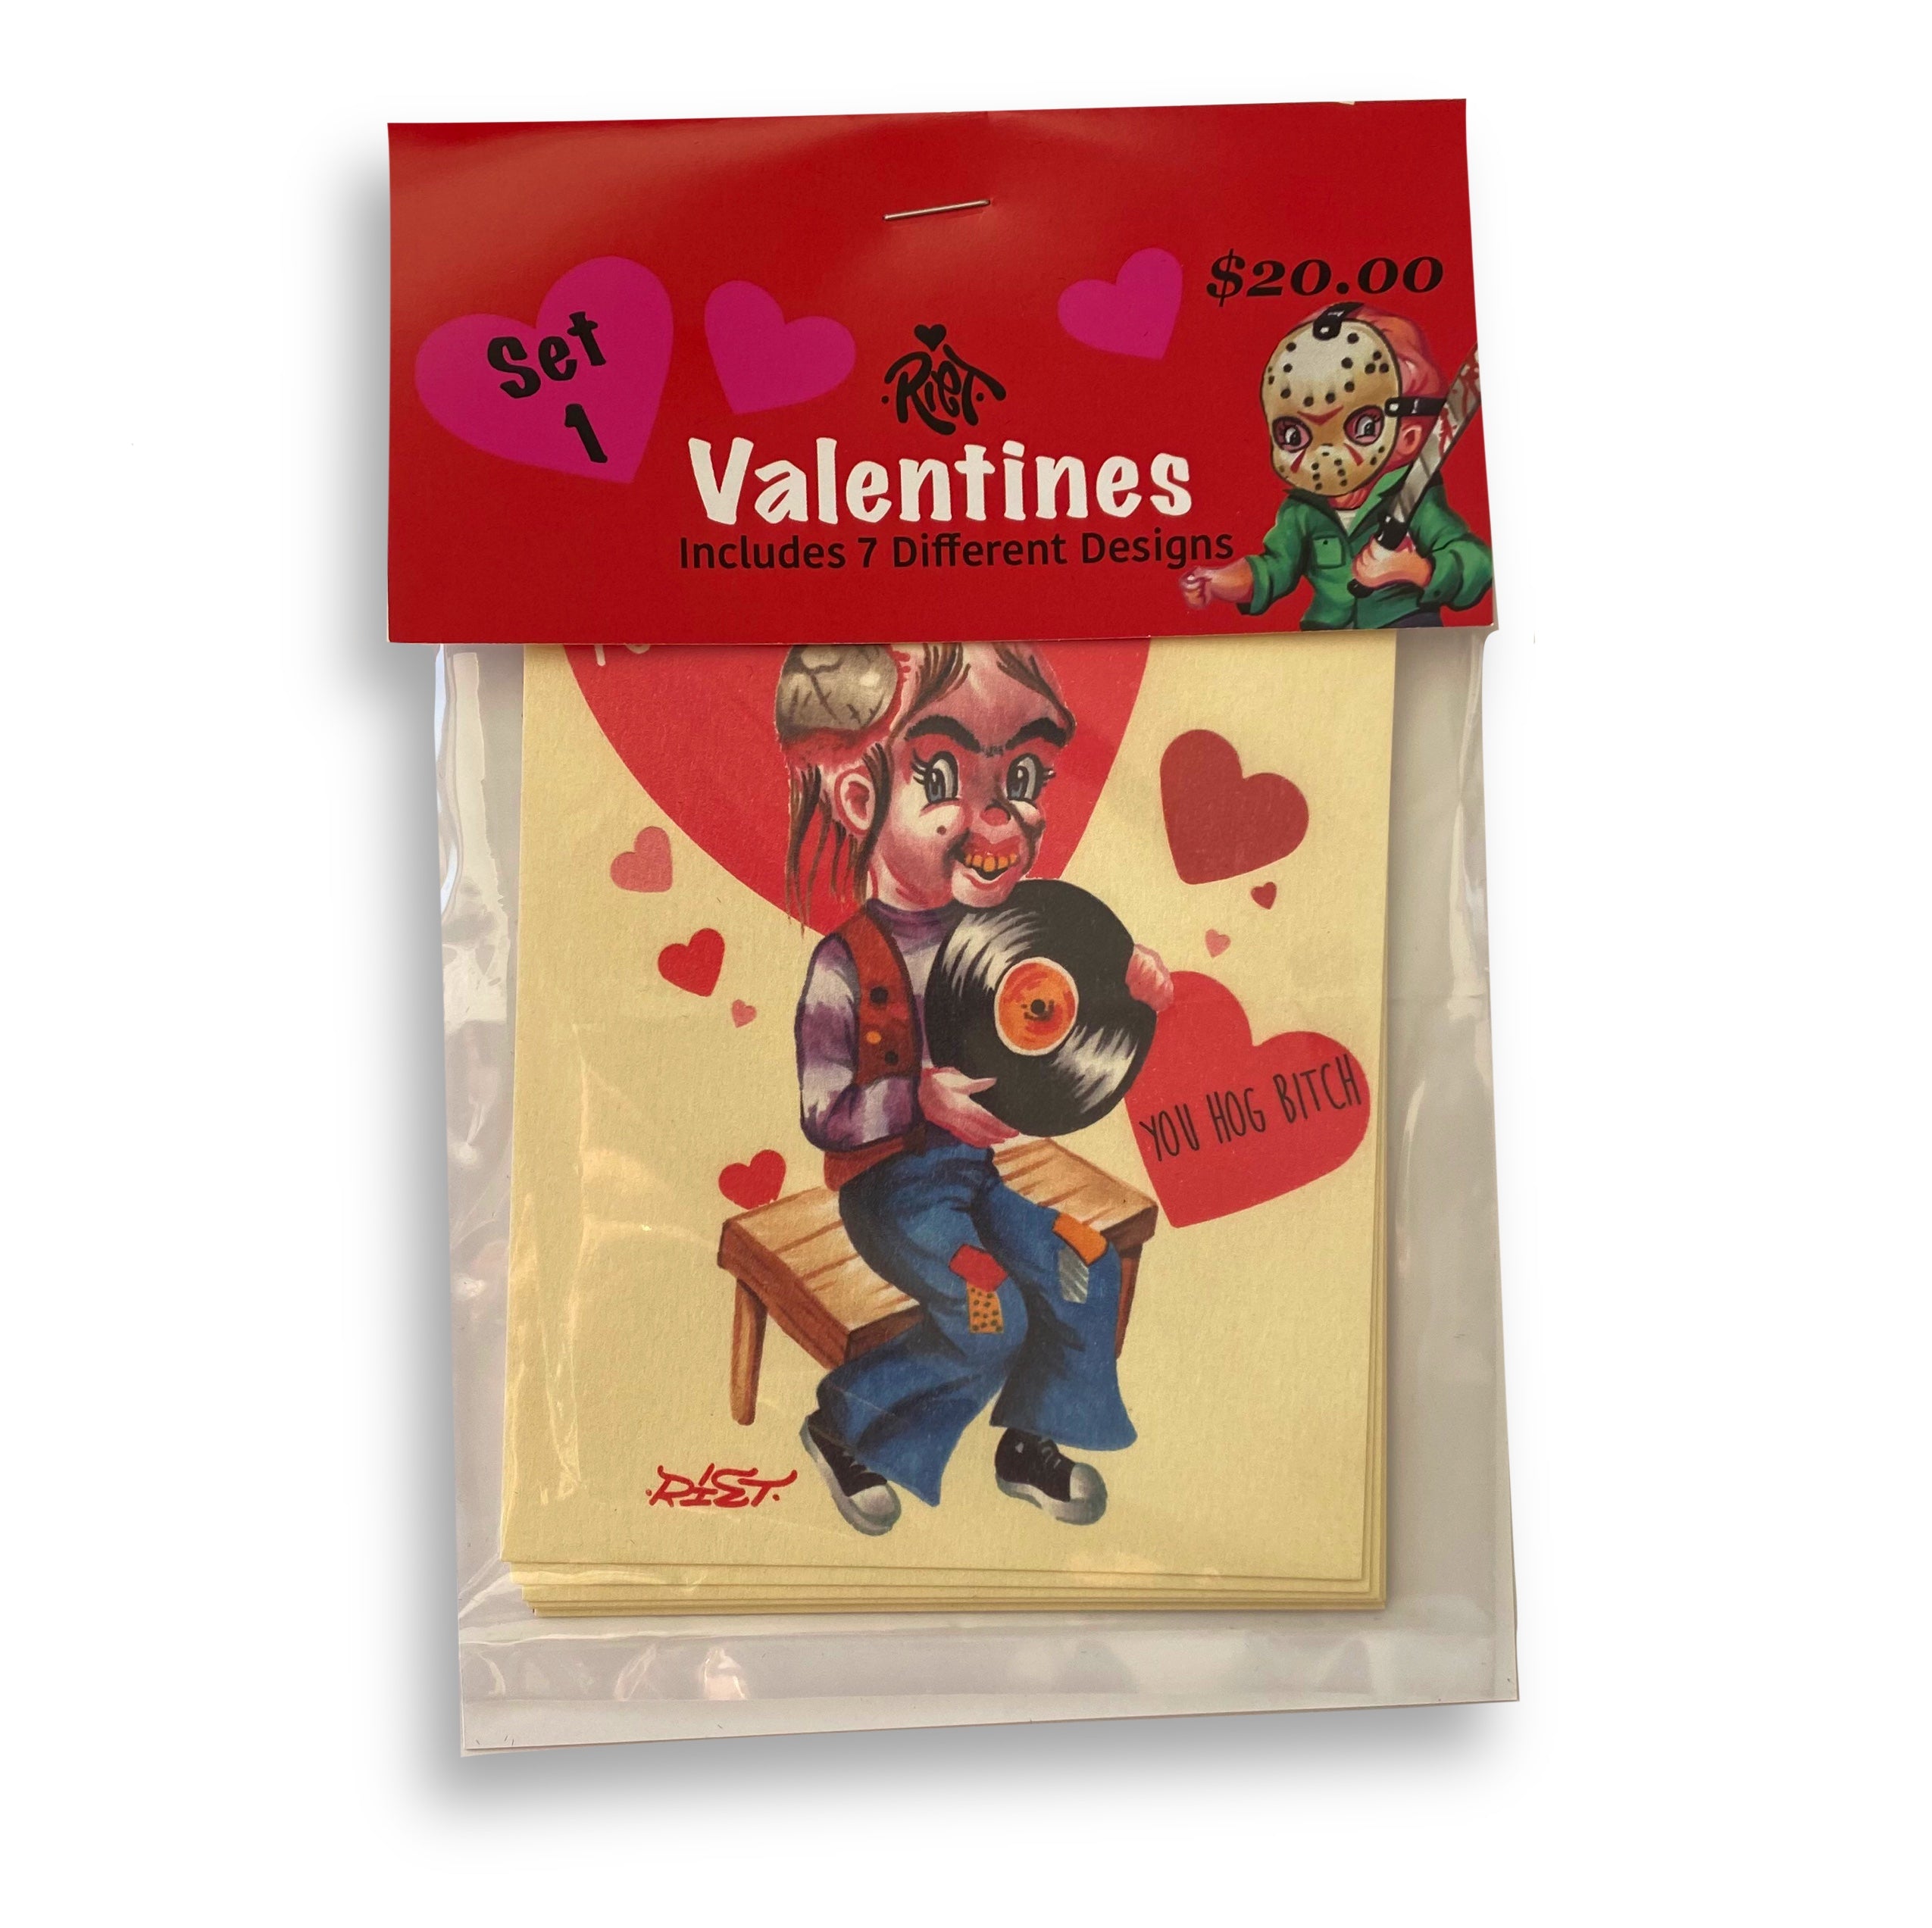 Set 1: Horror Valentine Cards